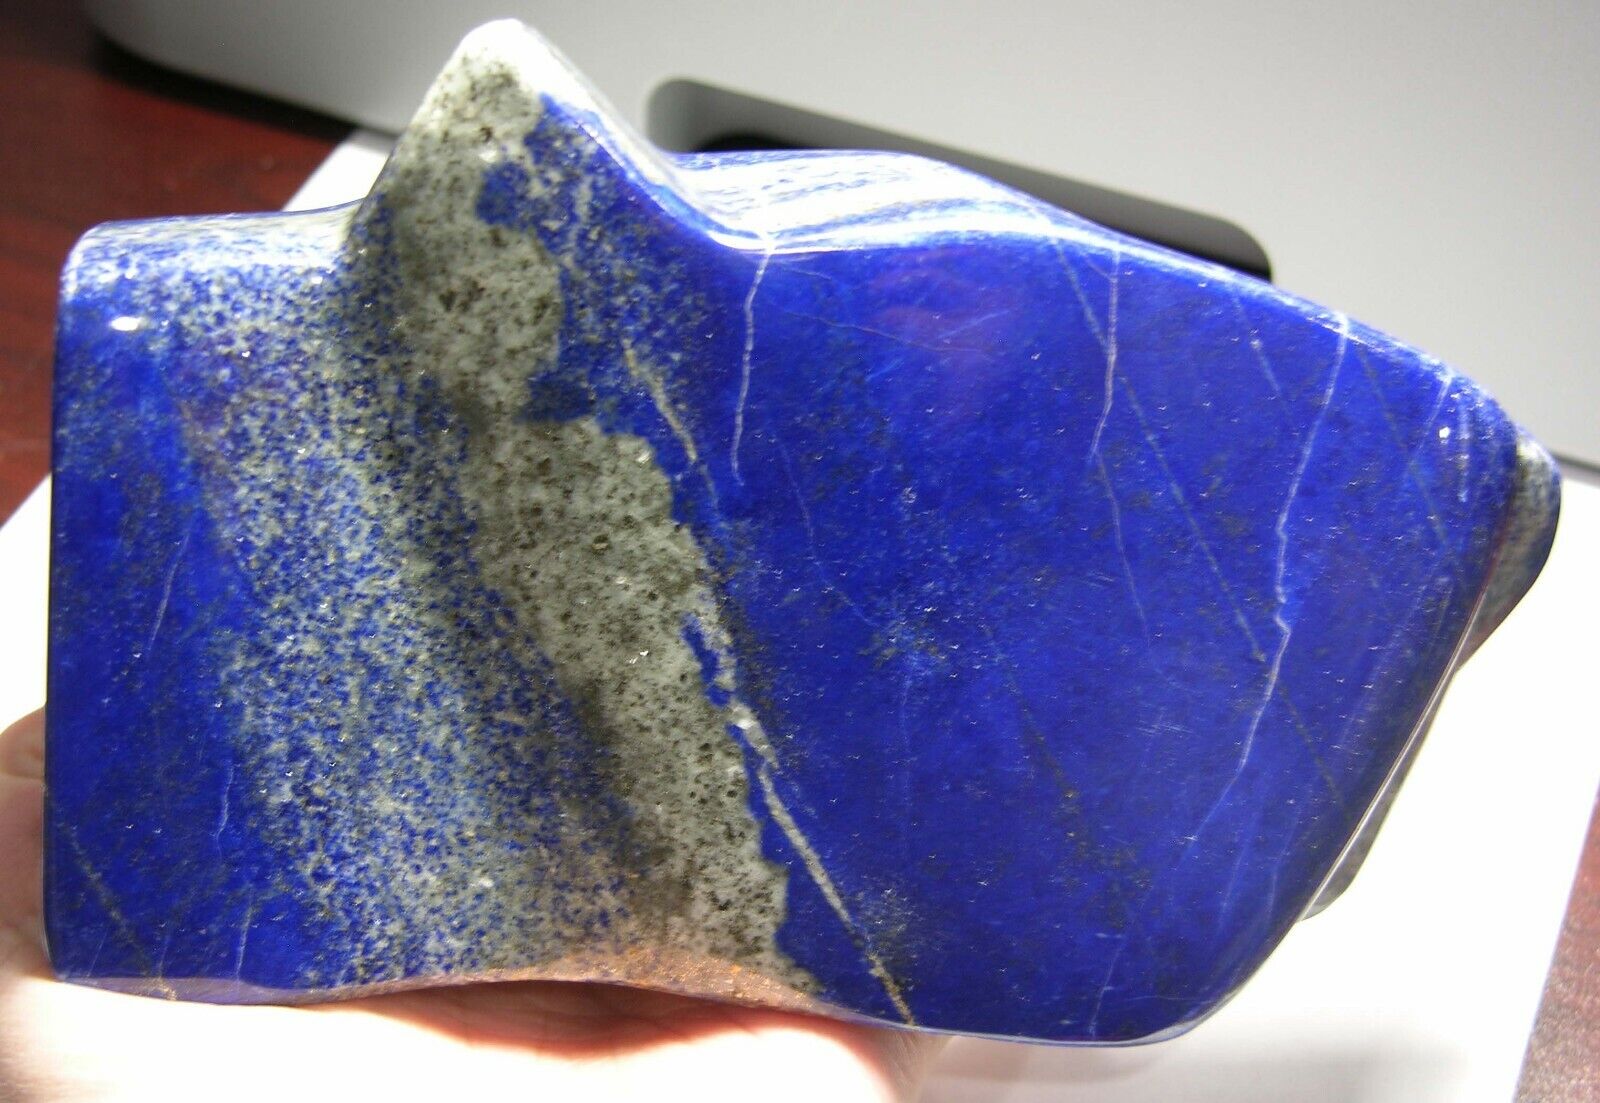  #8 Afghanistan 1020g Natural Tumbled Rough Lapis Lazuli Specimen 2.25 lbs 152mm